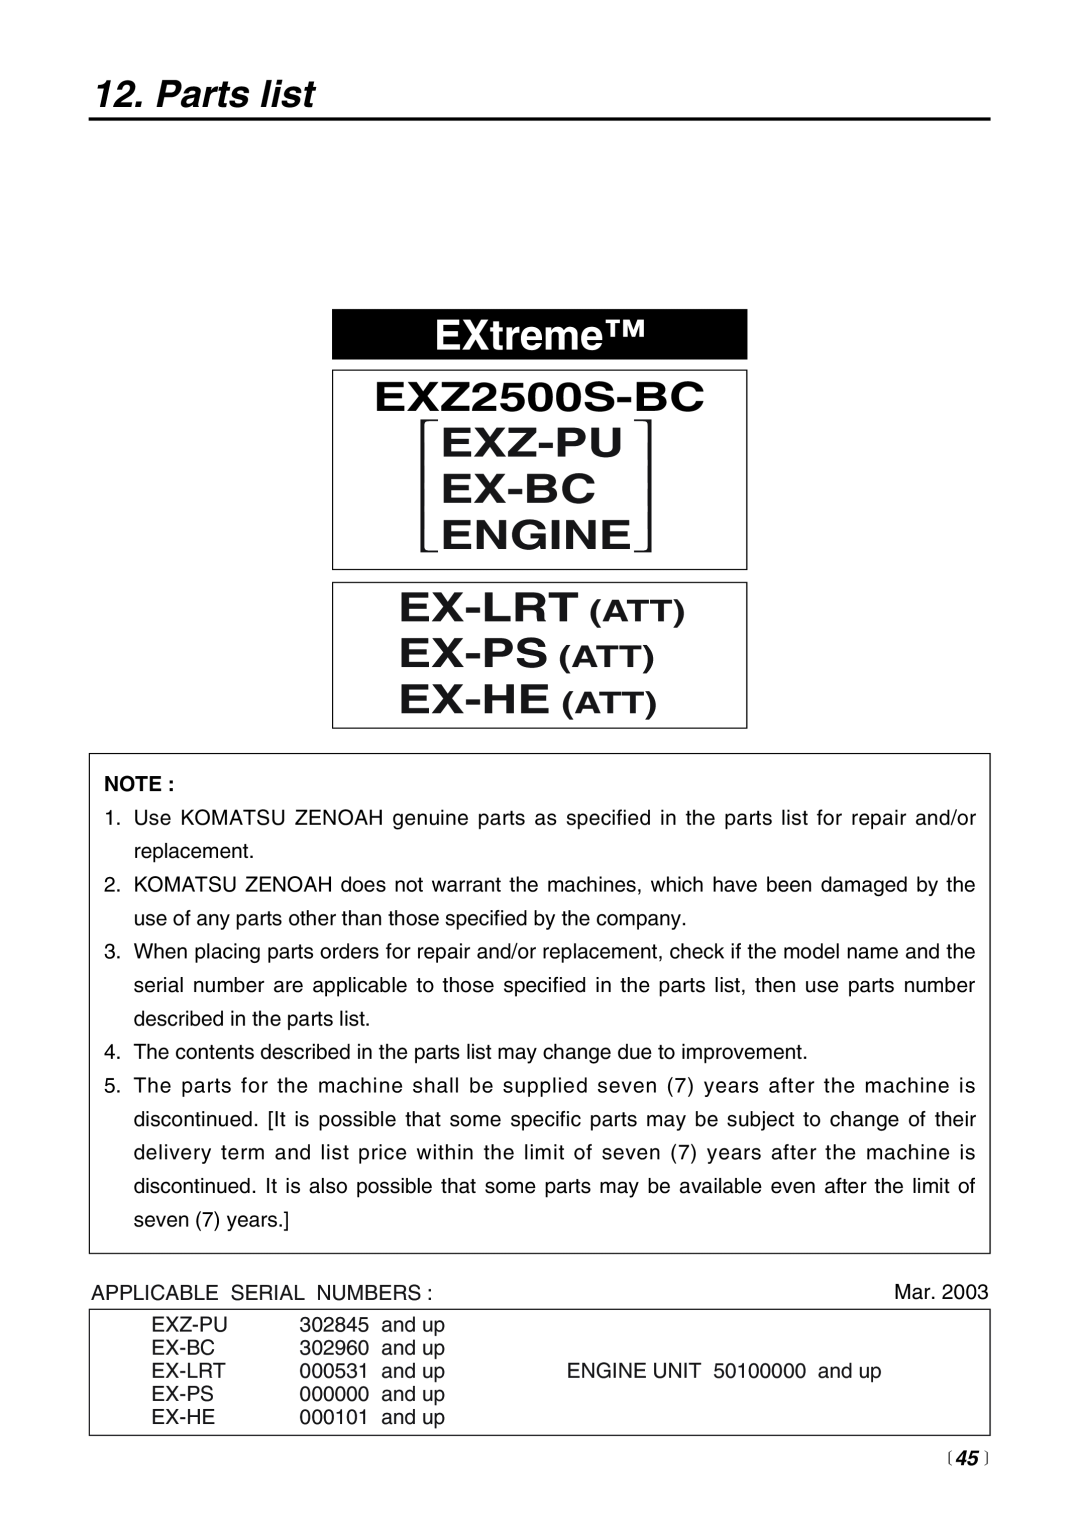 RedMax EX-BC manual Parts list, EXtreme, EXZ2500S-BC EXZ-PU ,  Ex-Bc   Engine, Ex-Lrt Att Ex-Ps Att Ex-He Att 